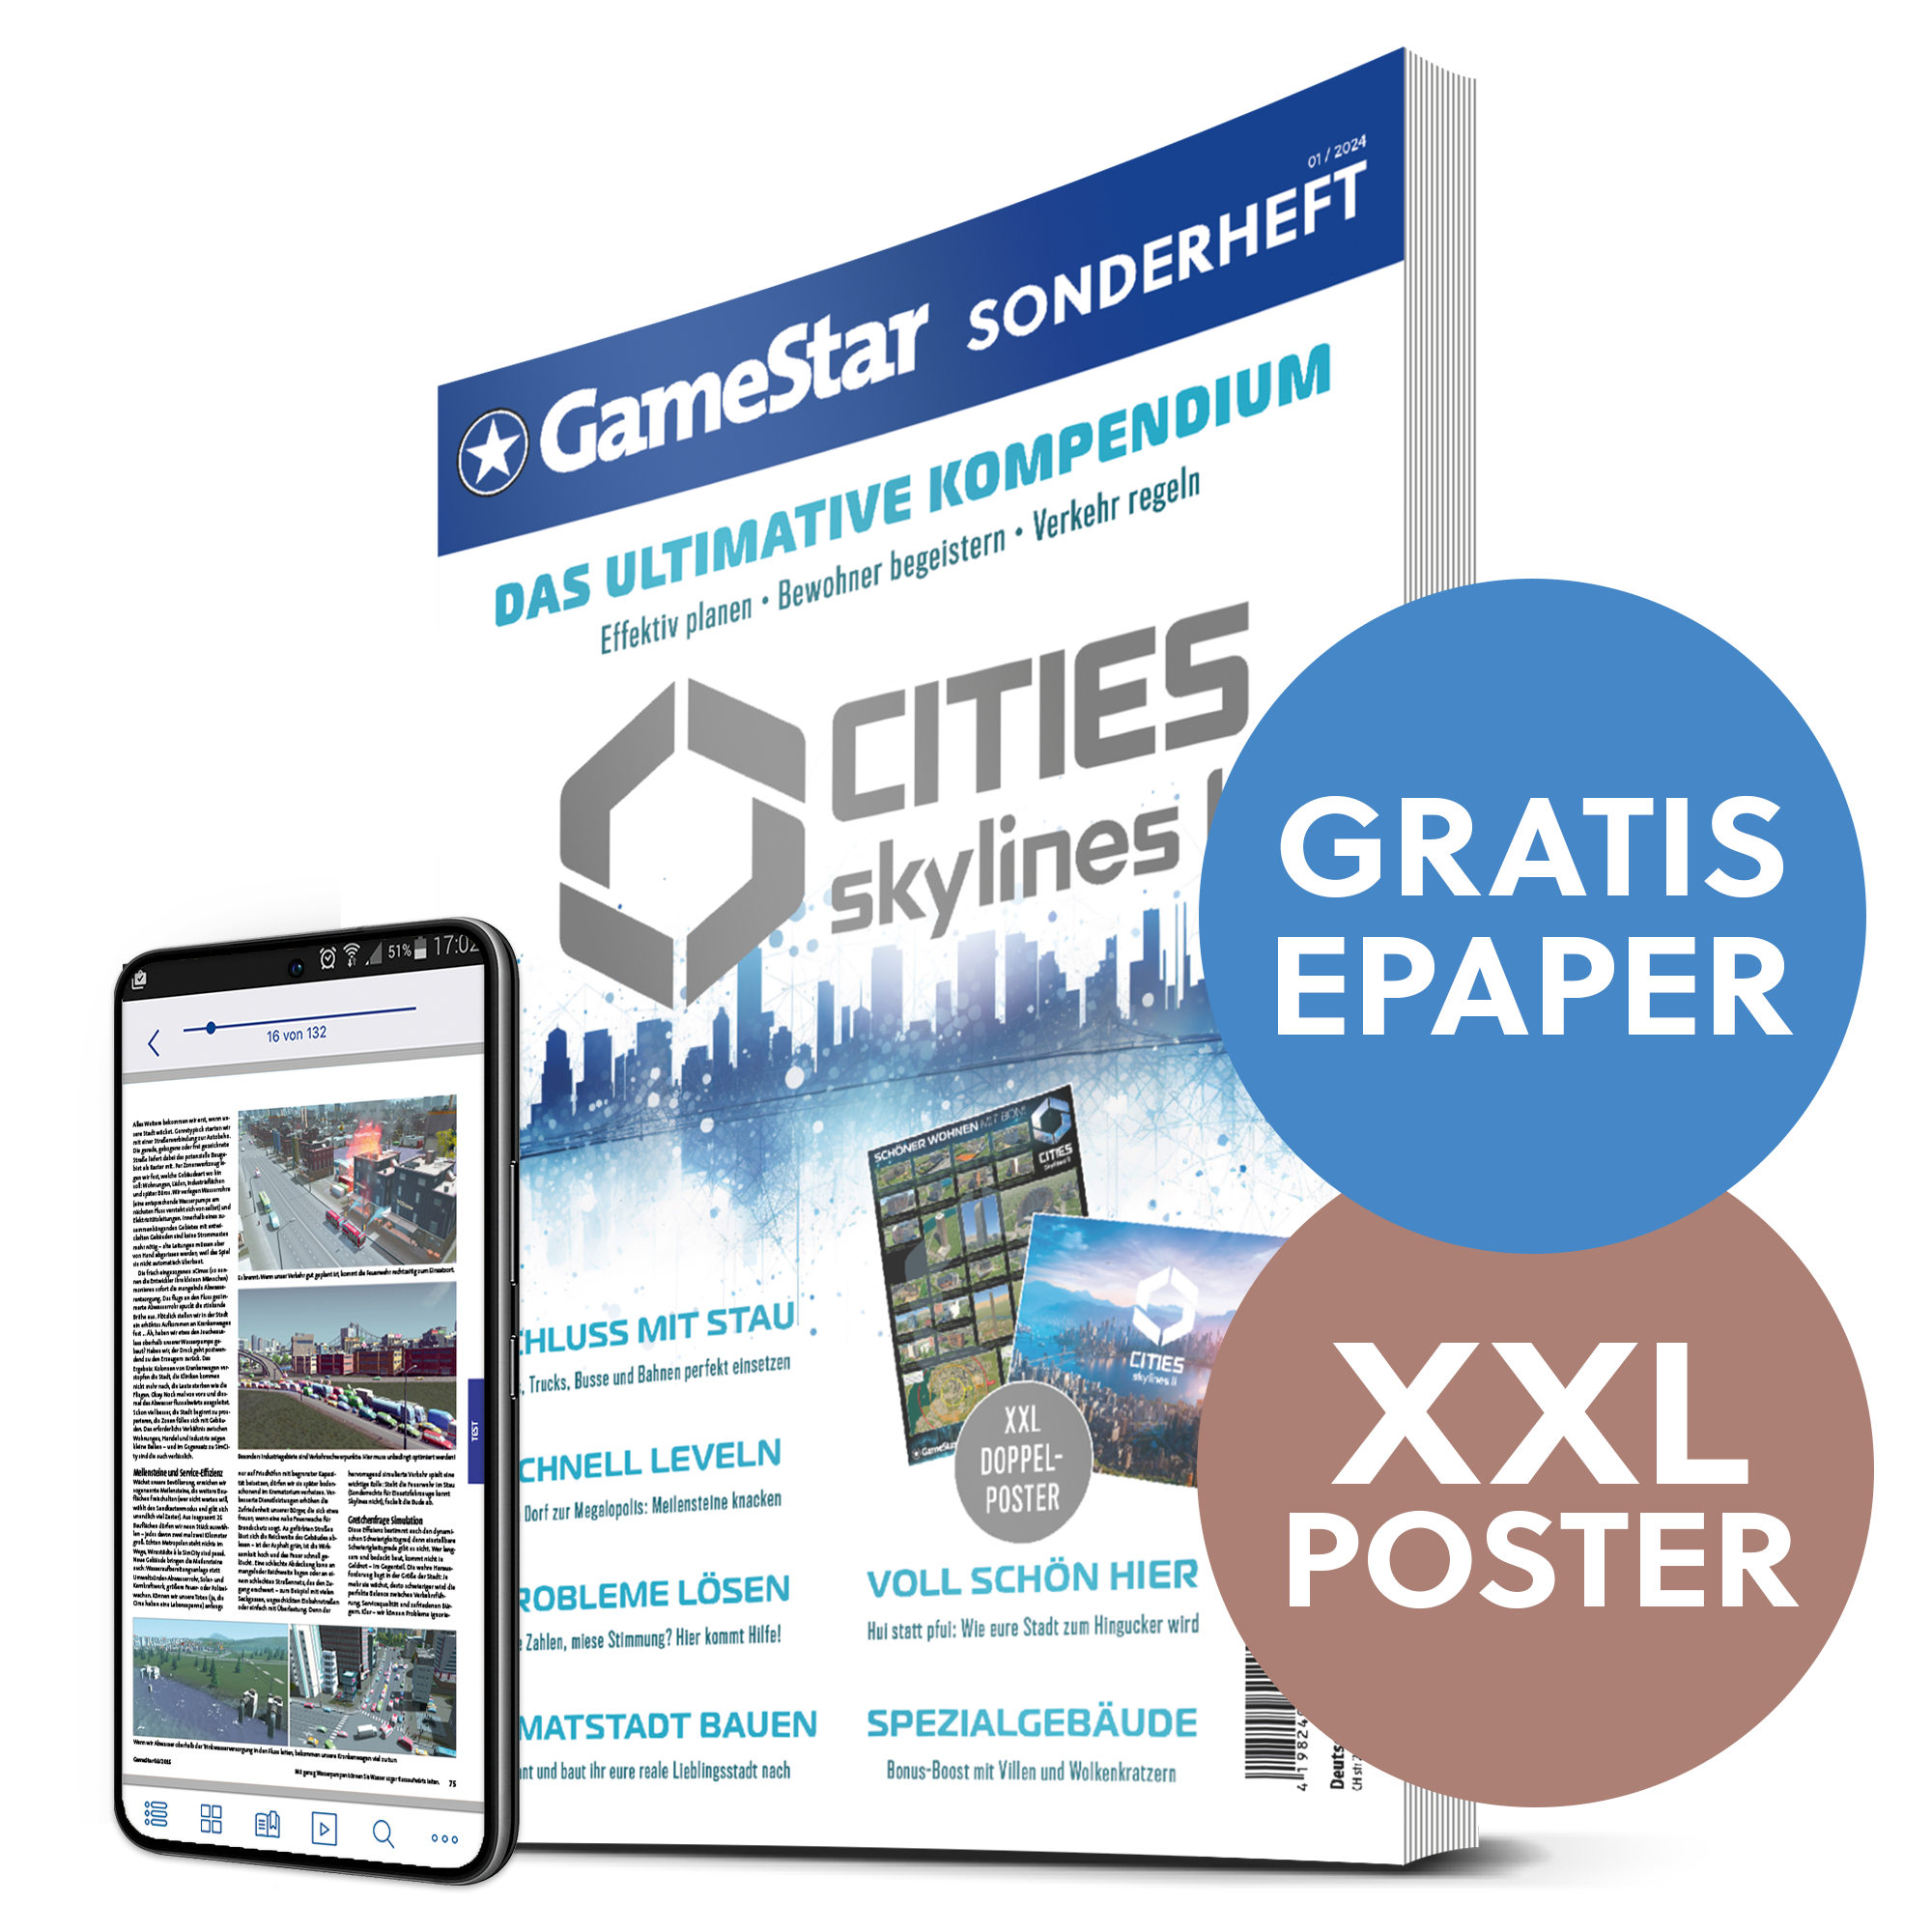 GameStar Sonderheft zu Cities: Skylines 2